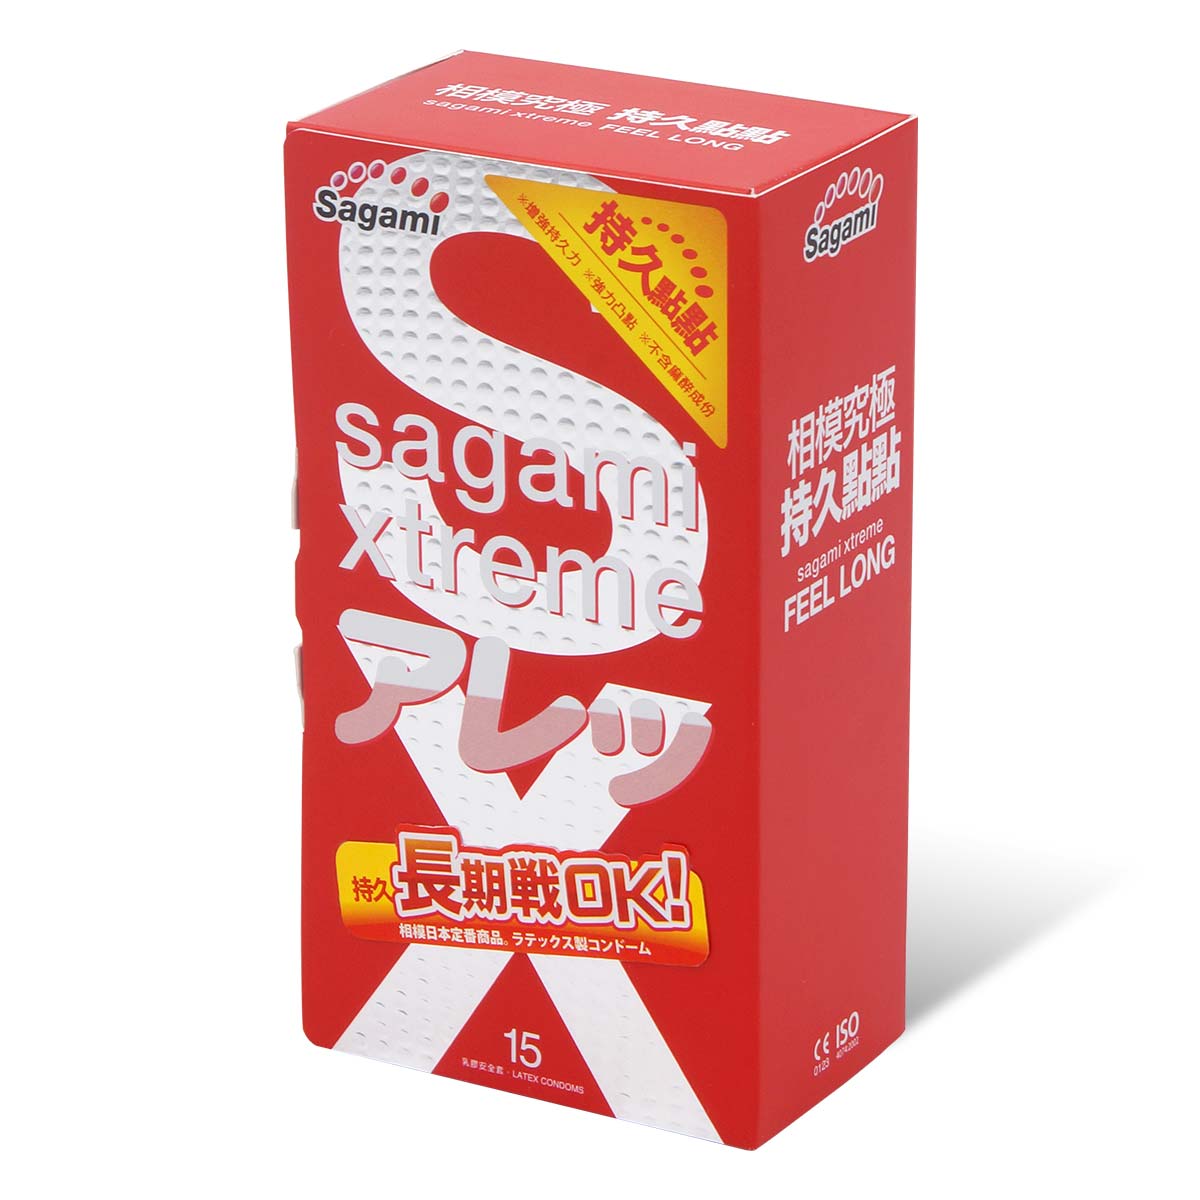 Sagami Xtreme Feel Long 15's Pack Latex Condom ()-p_1